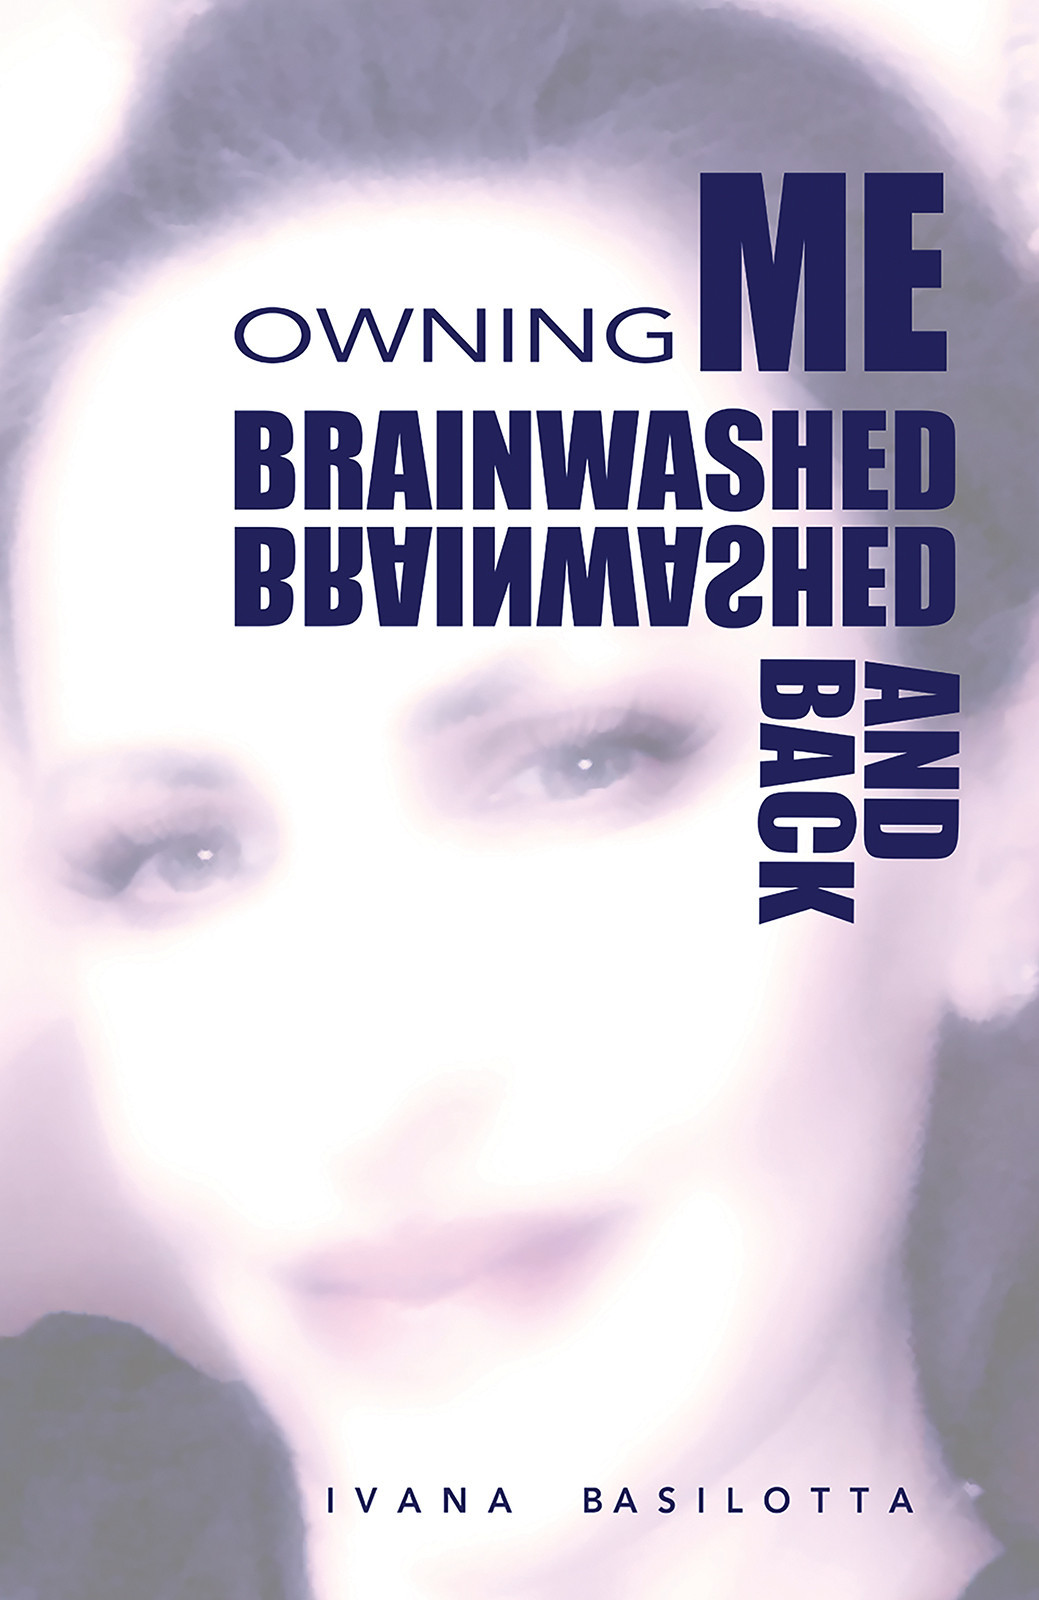 Brainwashed and Back